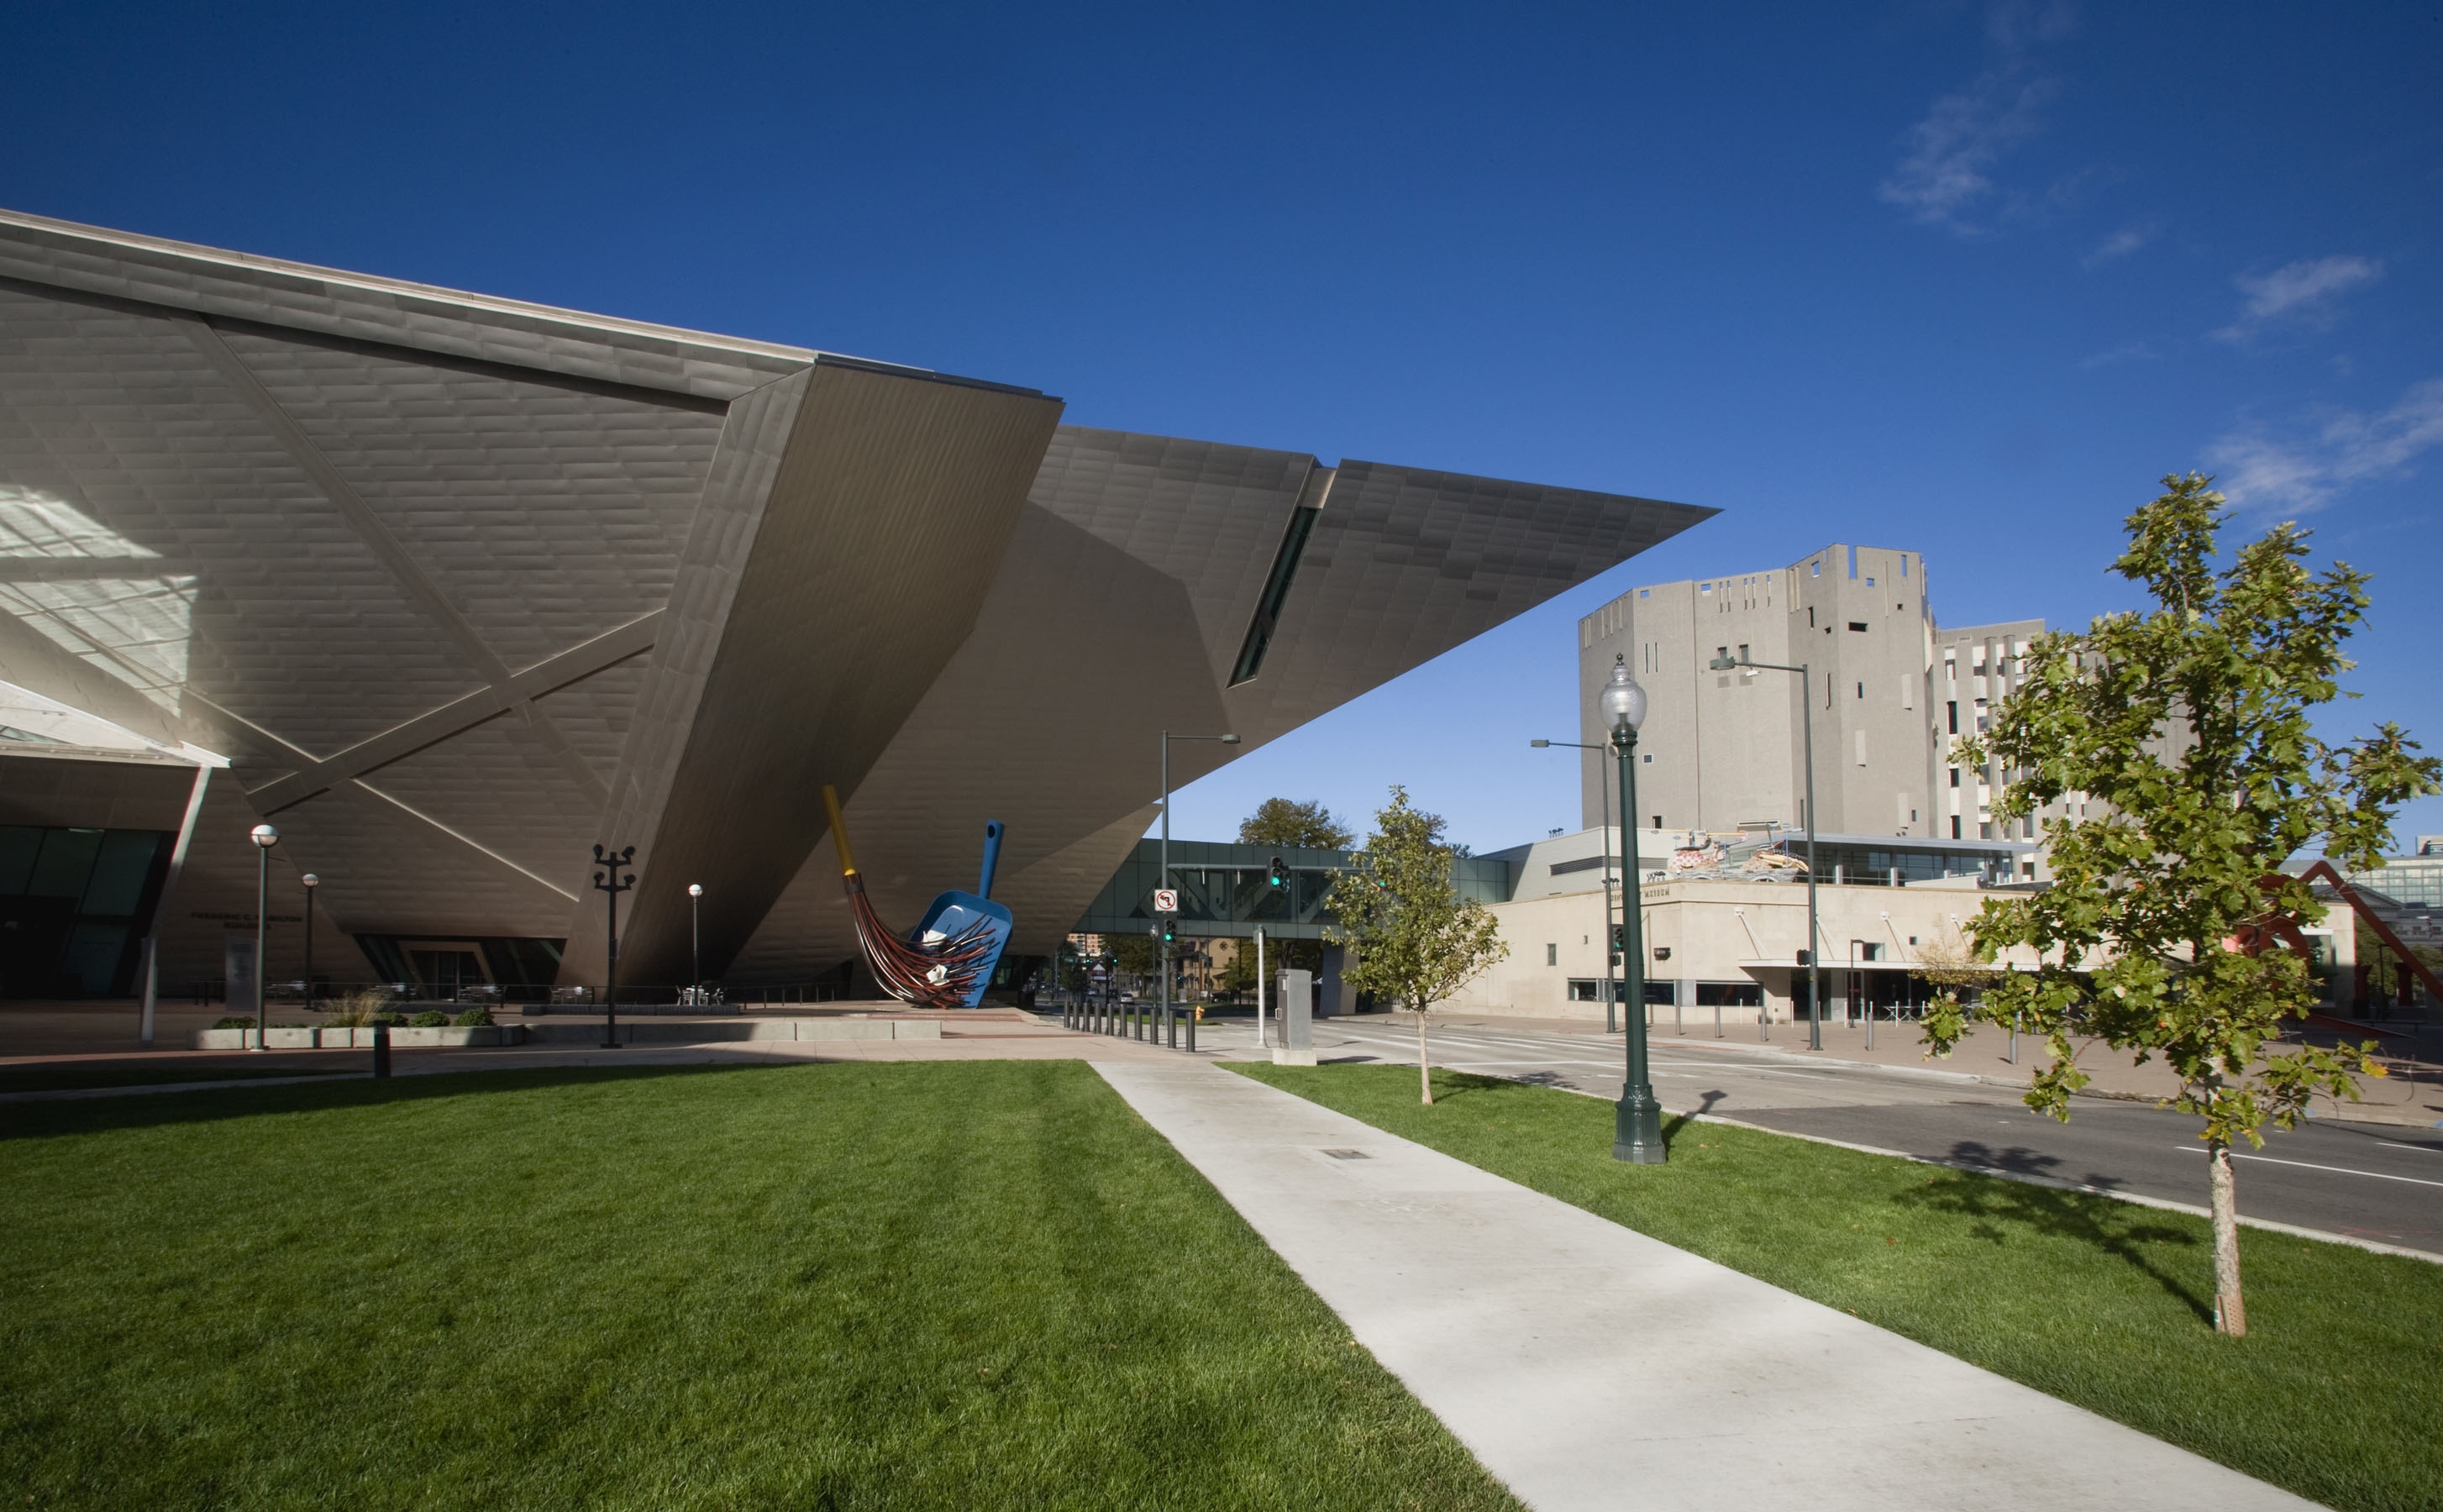 Denver Art Museum - Denver, CO 80204